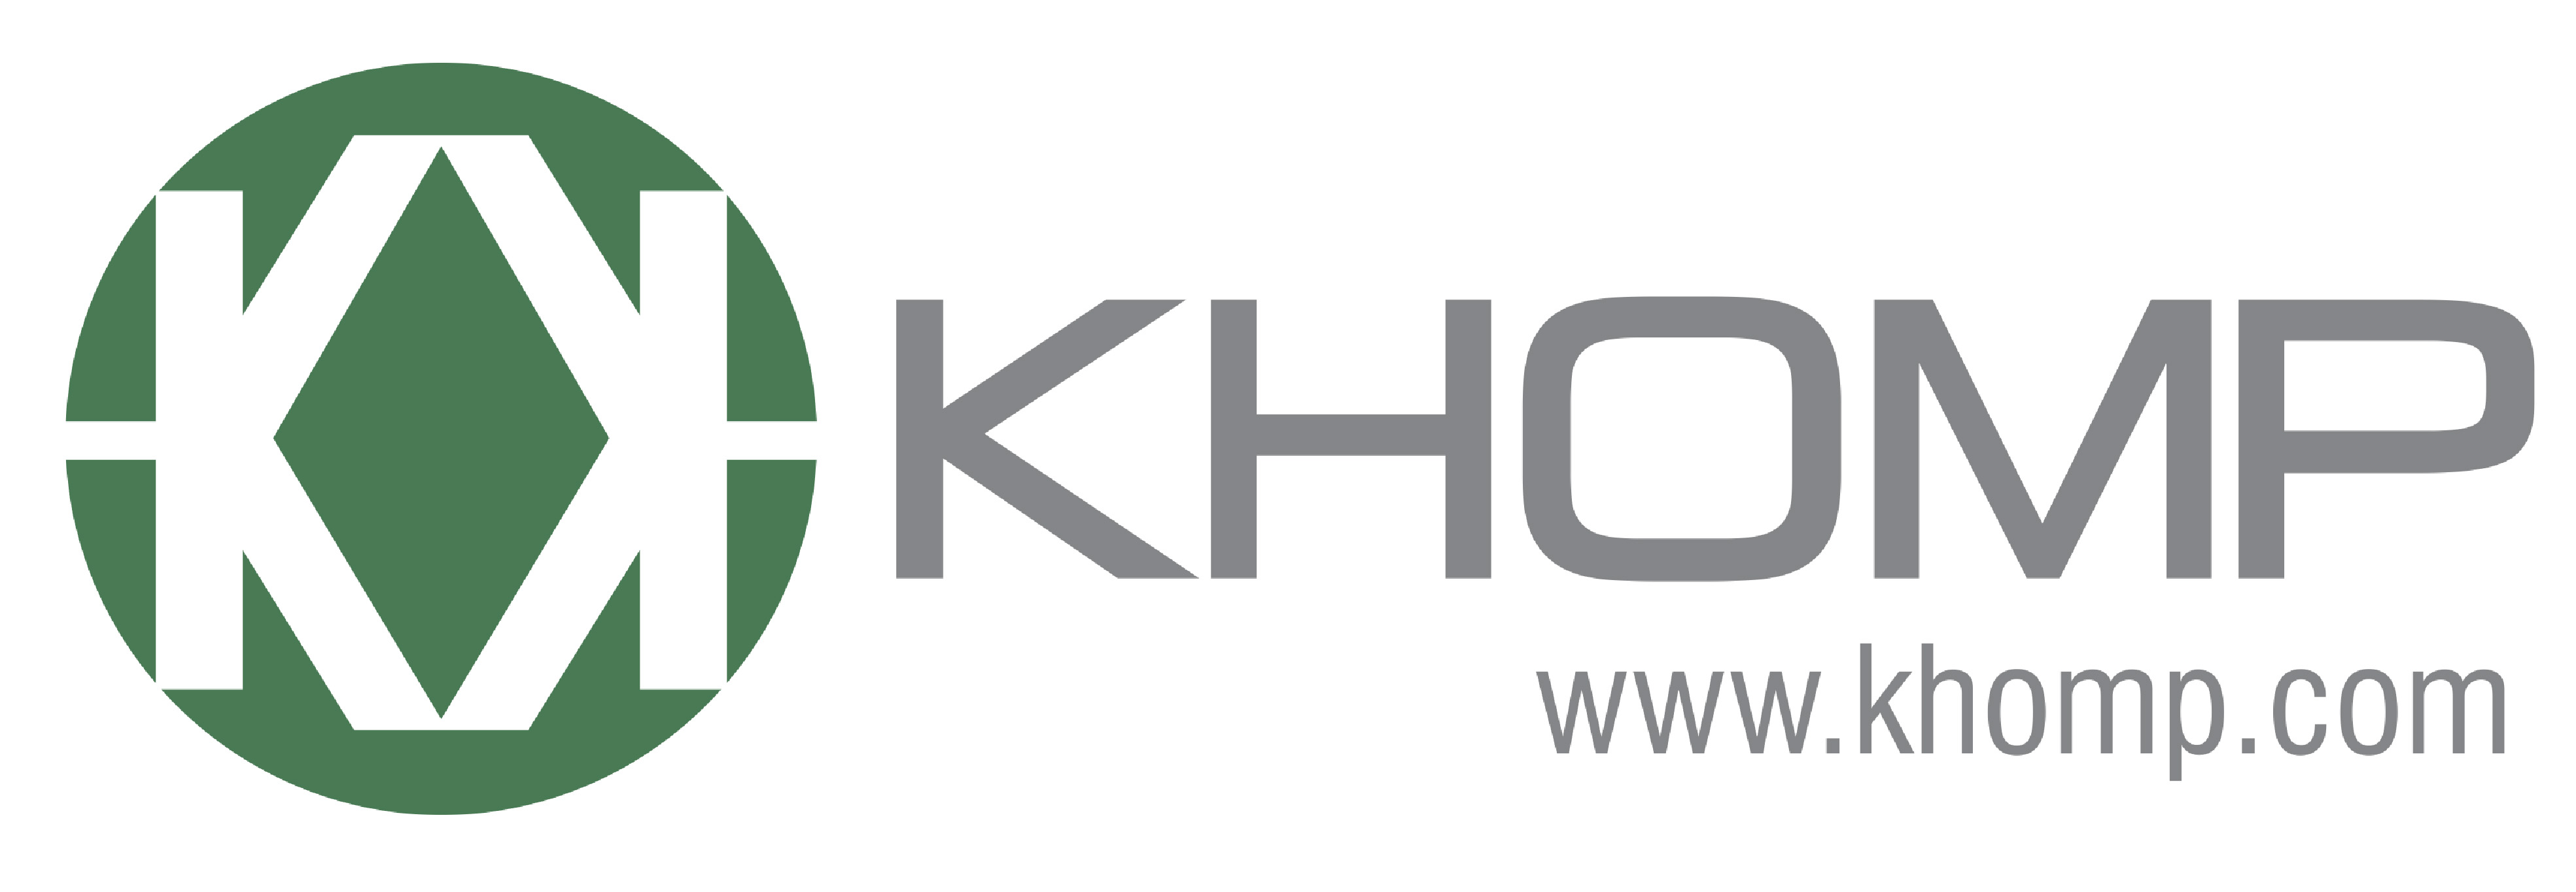 KHOMP announces new technology partnership with AVAYA